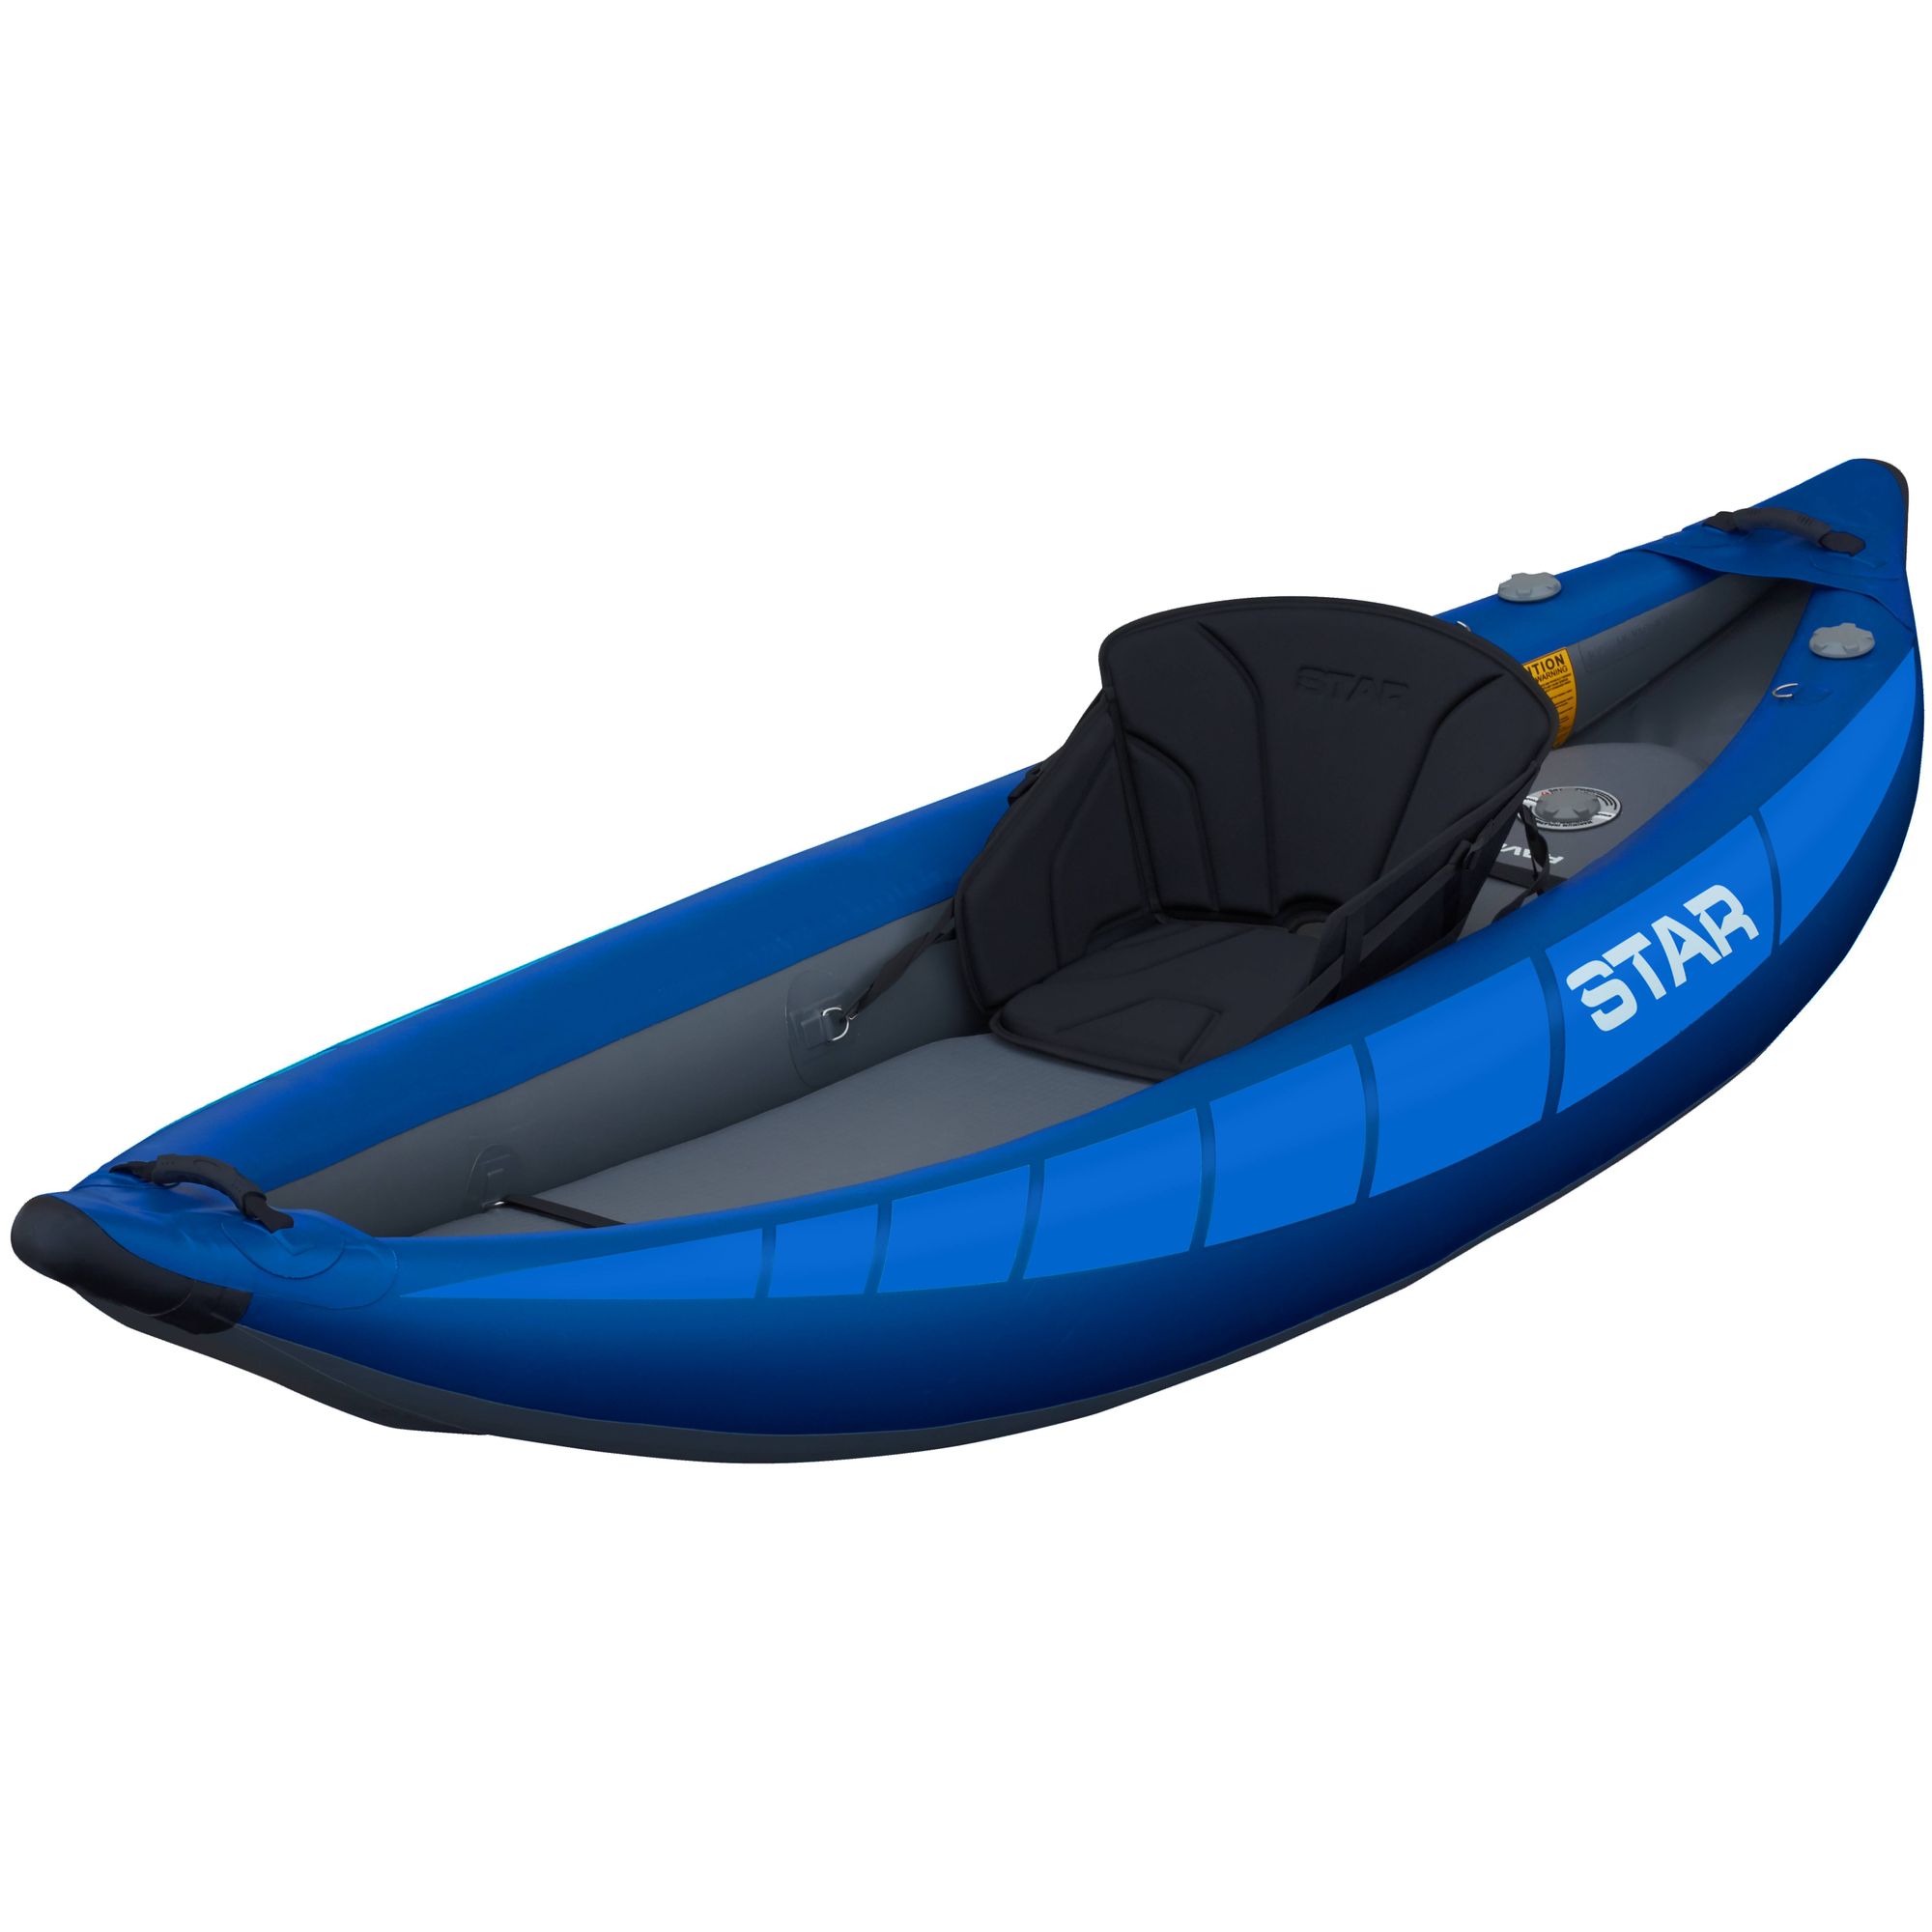 STAR Raven I Inflatable Kayak aufblasbares Luftkajak 